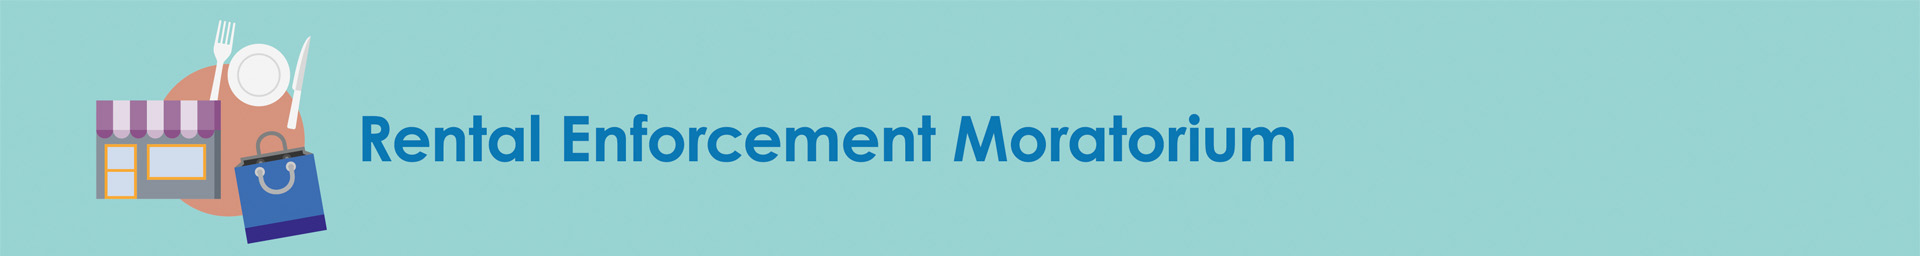 Rental Enforcement Moratorium